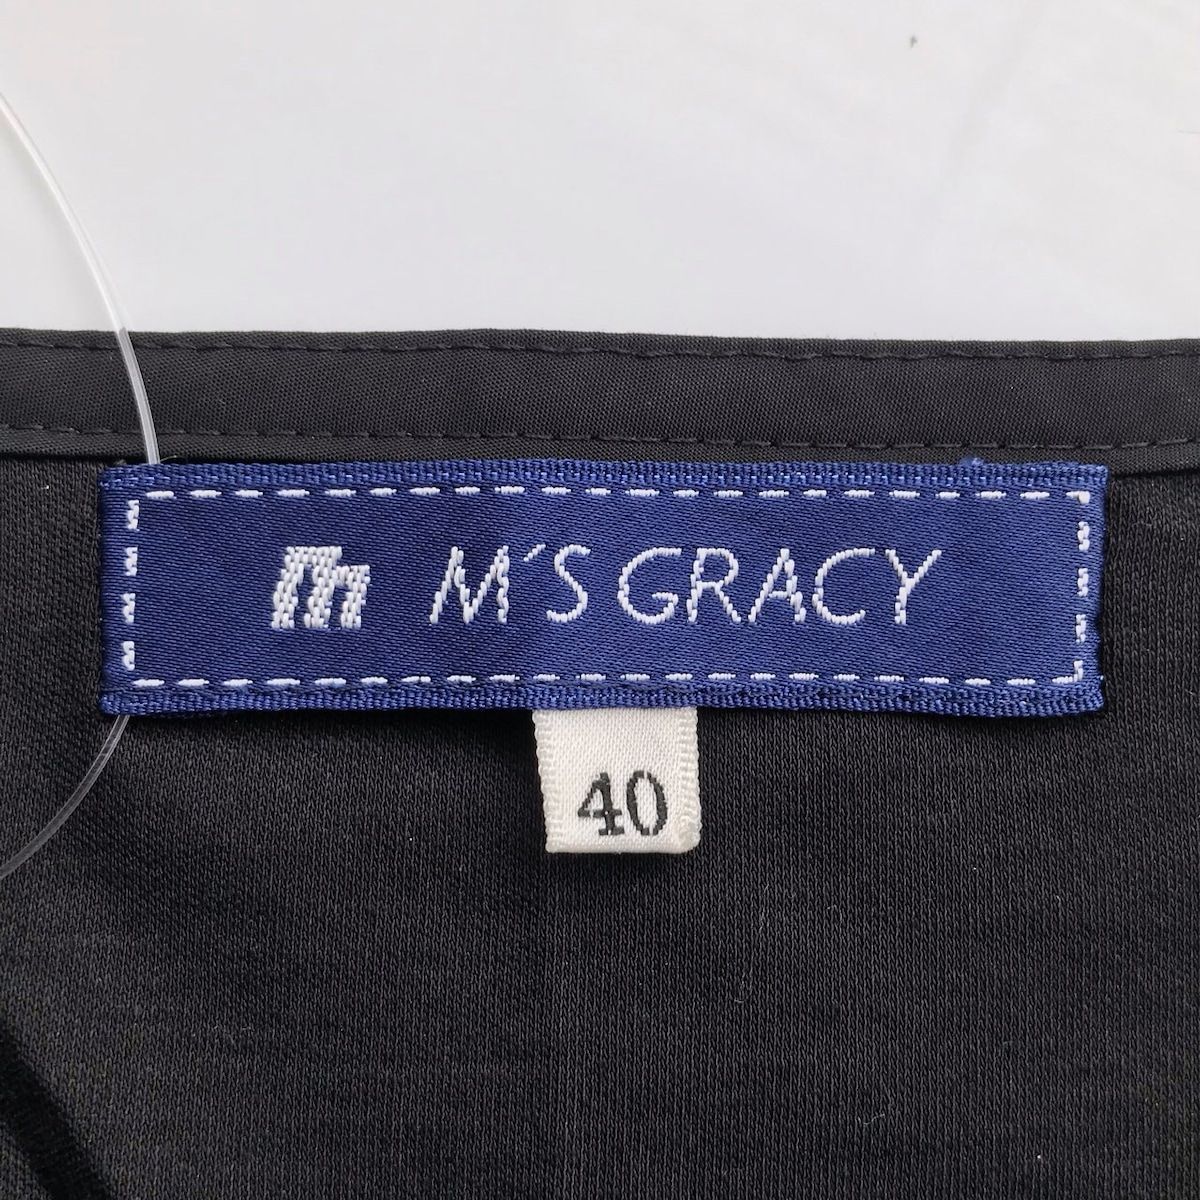 M'S GRACY(エムズグレイシー) 七分袖カットソー サイズ40 M レディース美品 - 黒 クルーネック